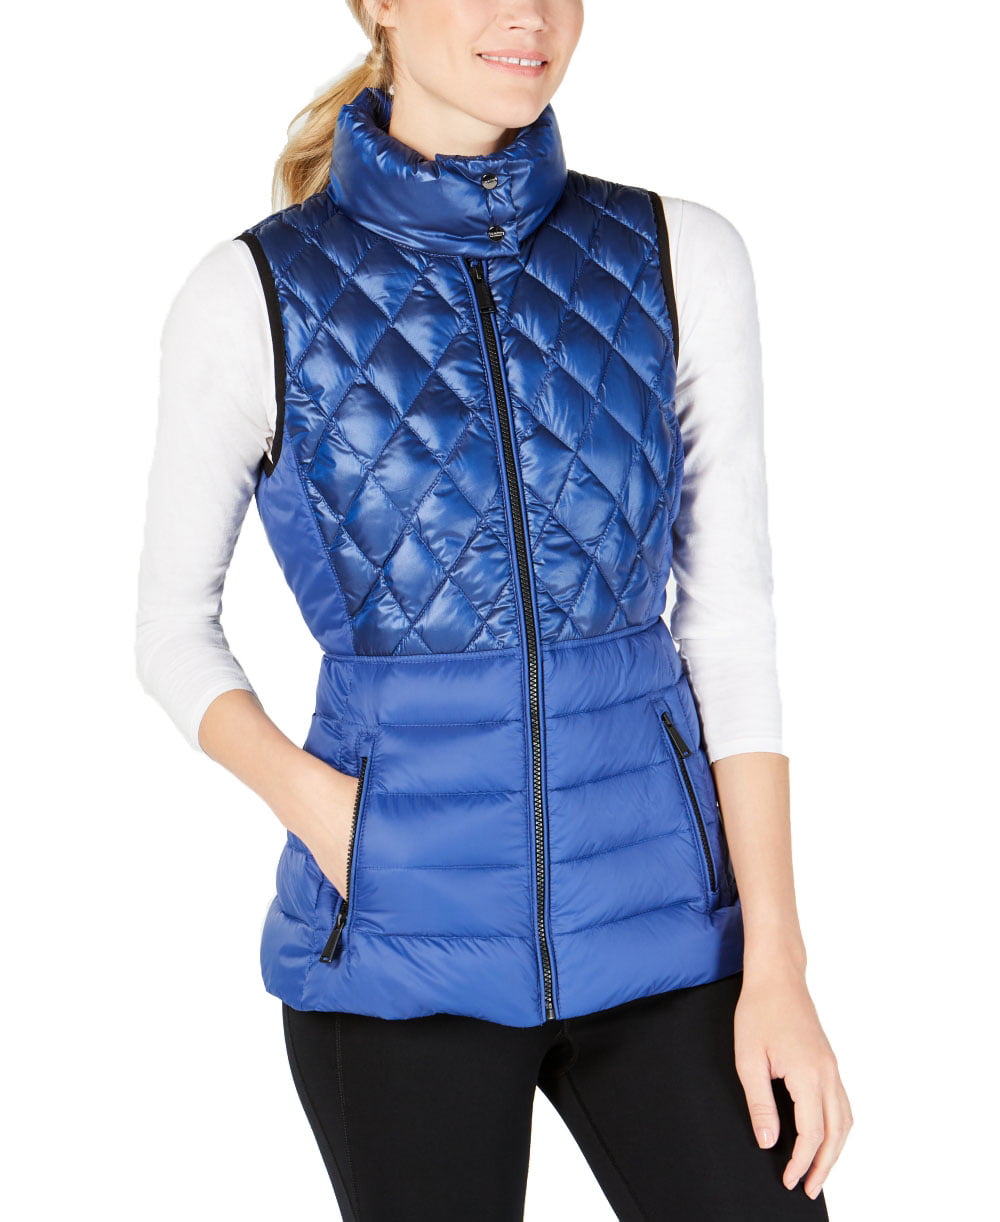 Nageslacht warm Appal Calvin Klein Performance Women's Quilted Down Vest (Blue, L) - Walmart.com